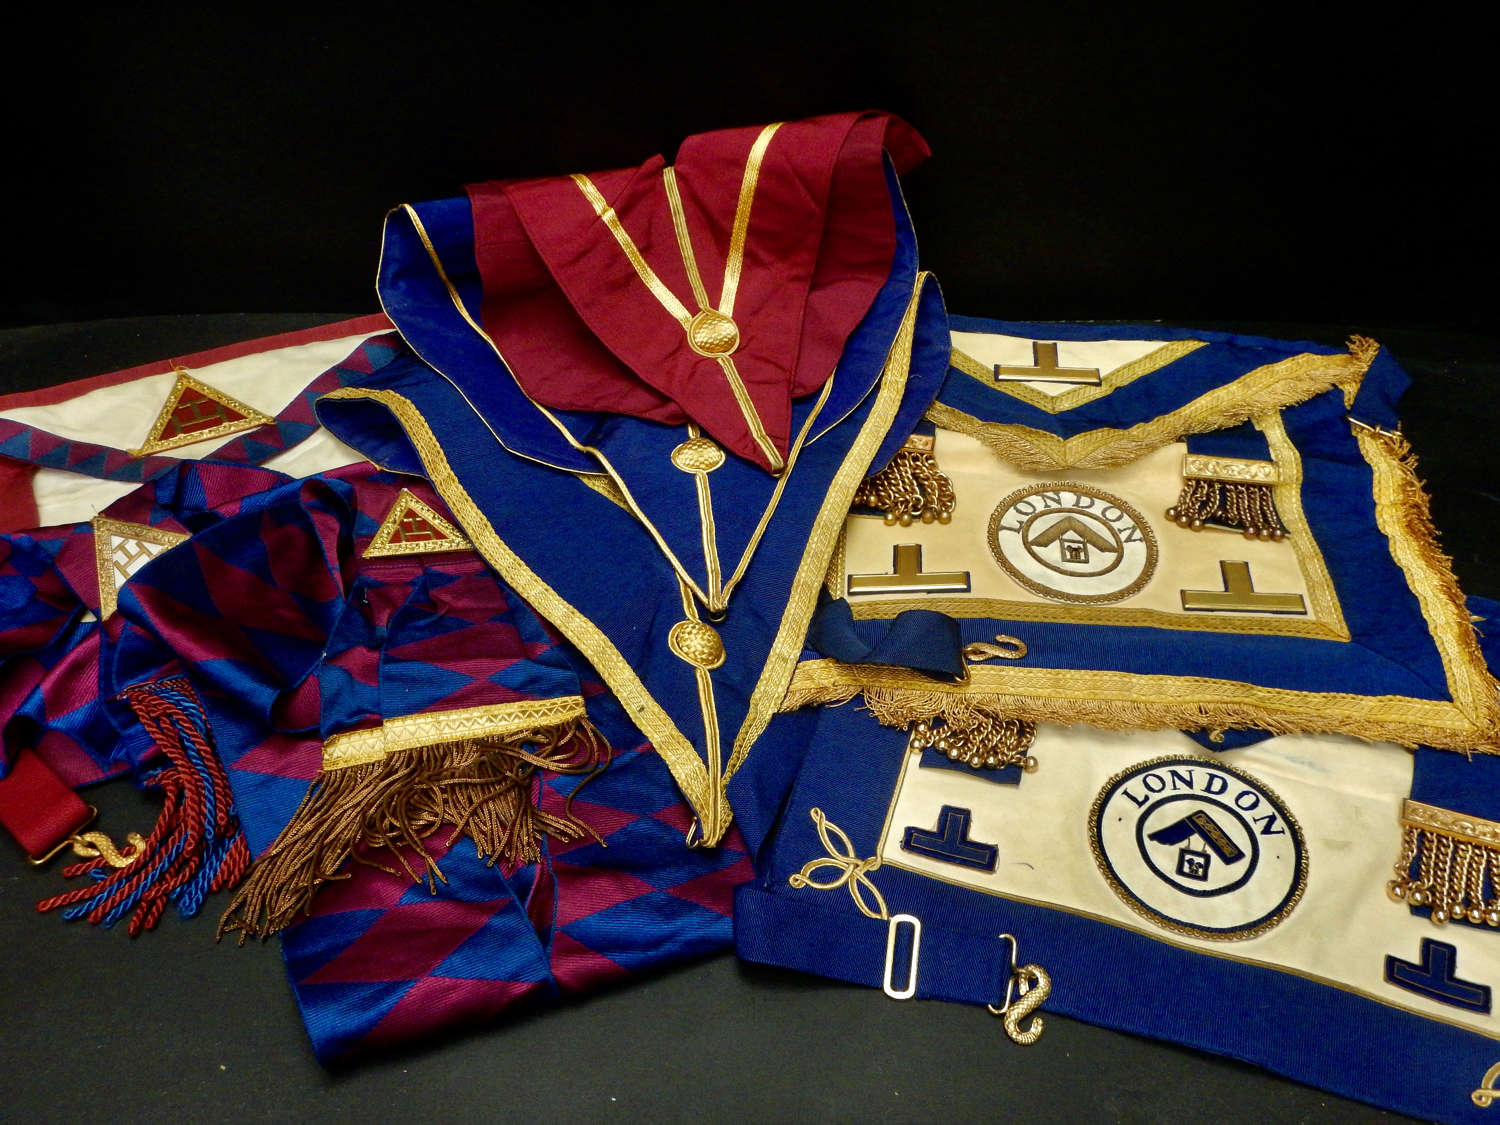 Vintage London Masonic Regalia - Aprons and Collars